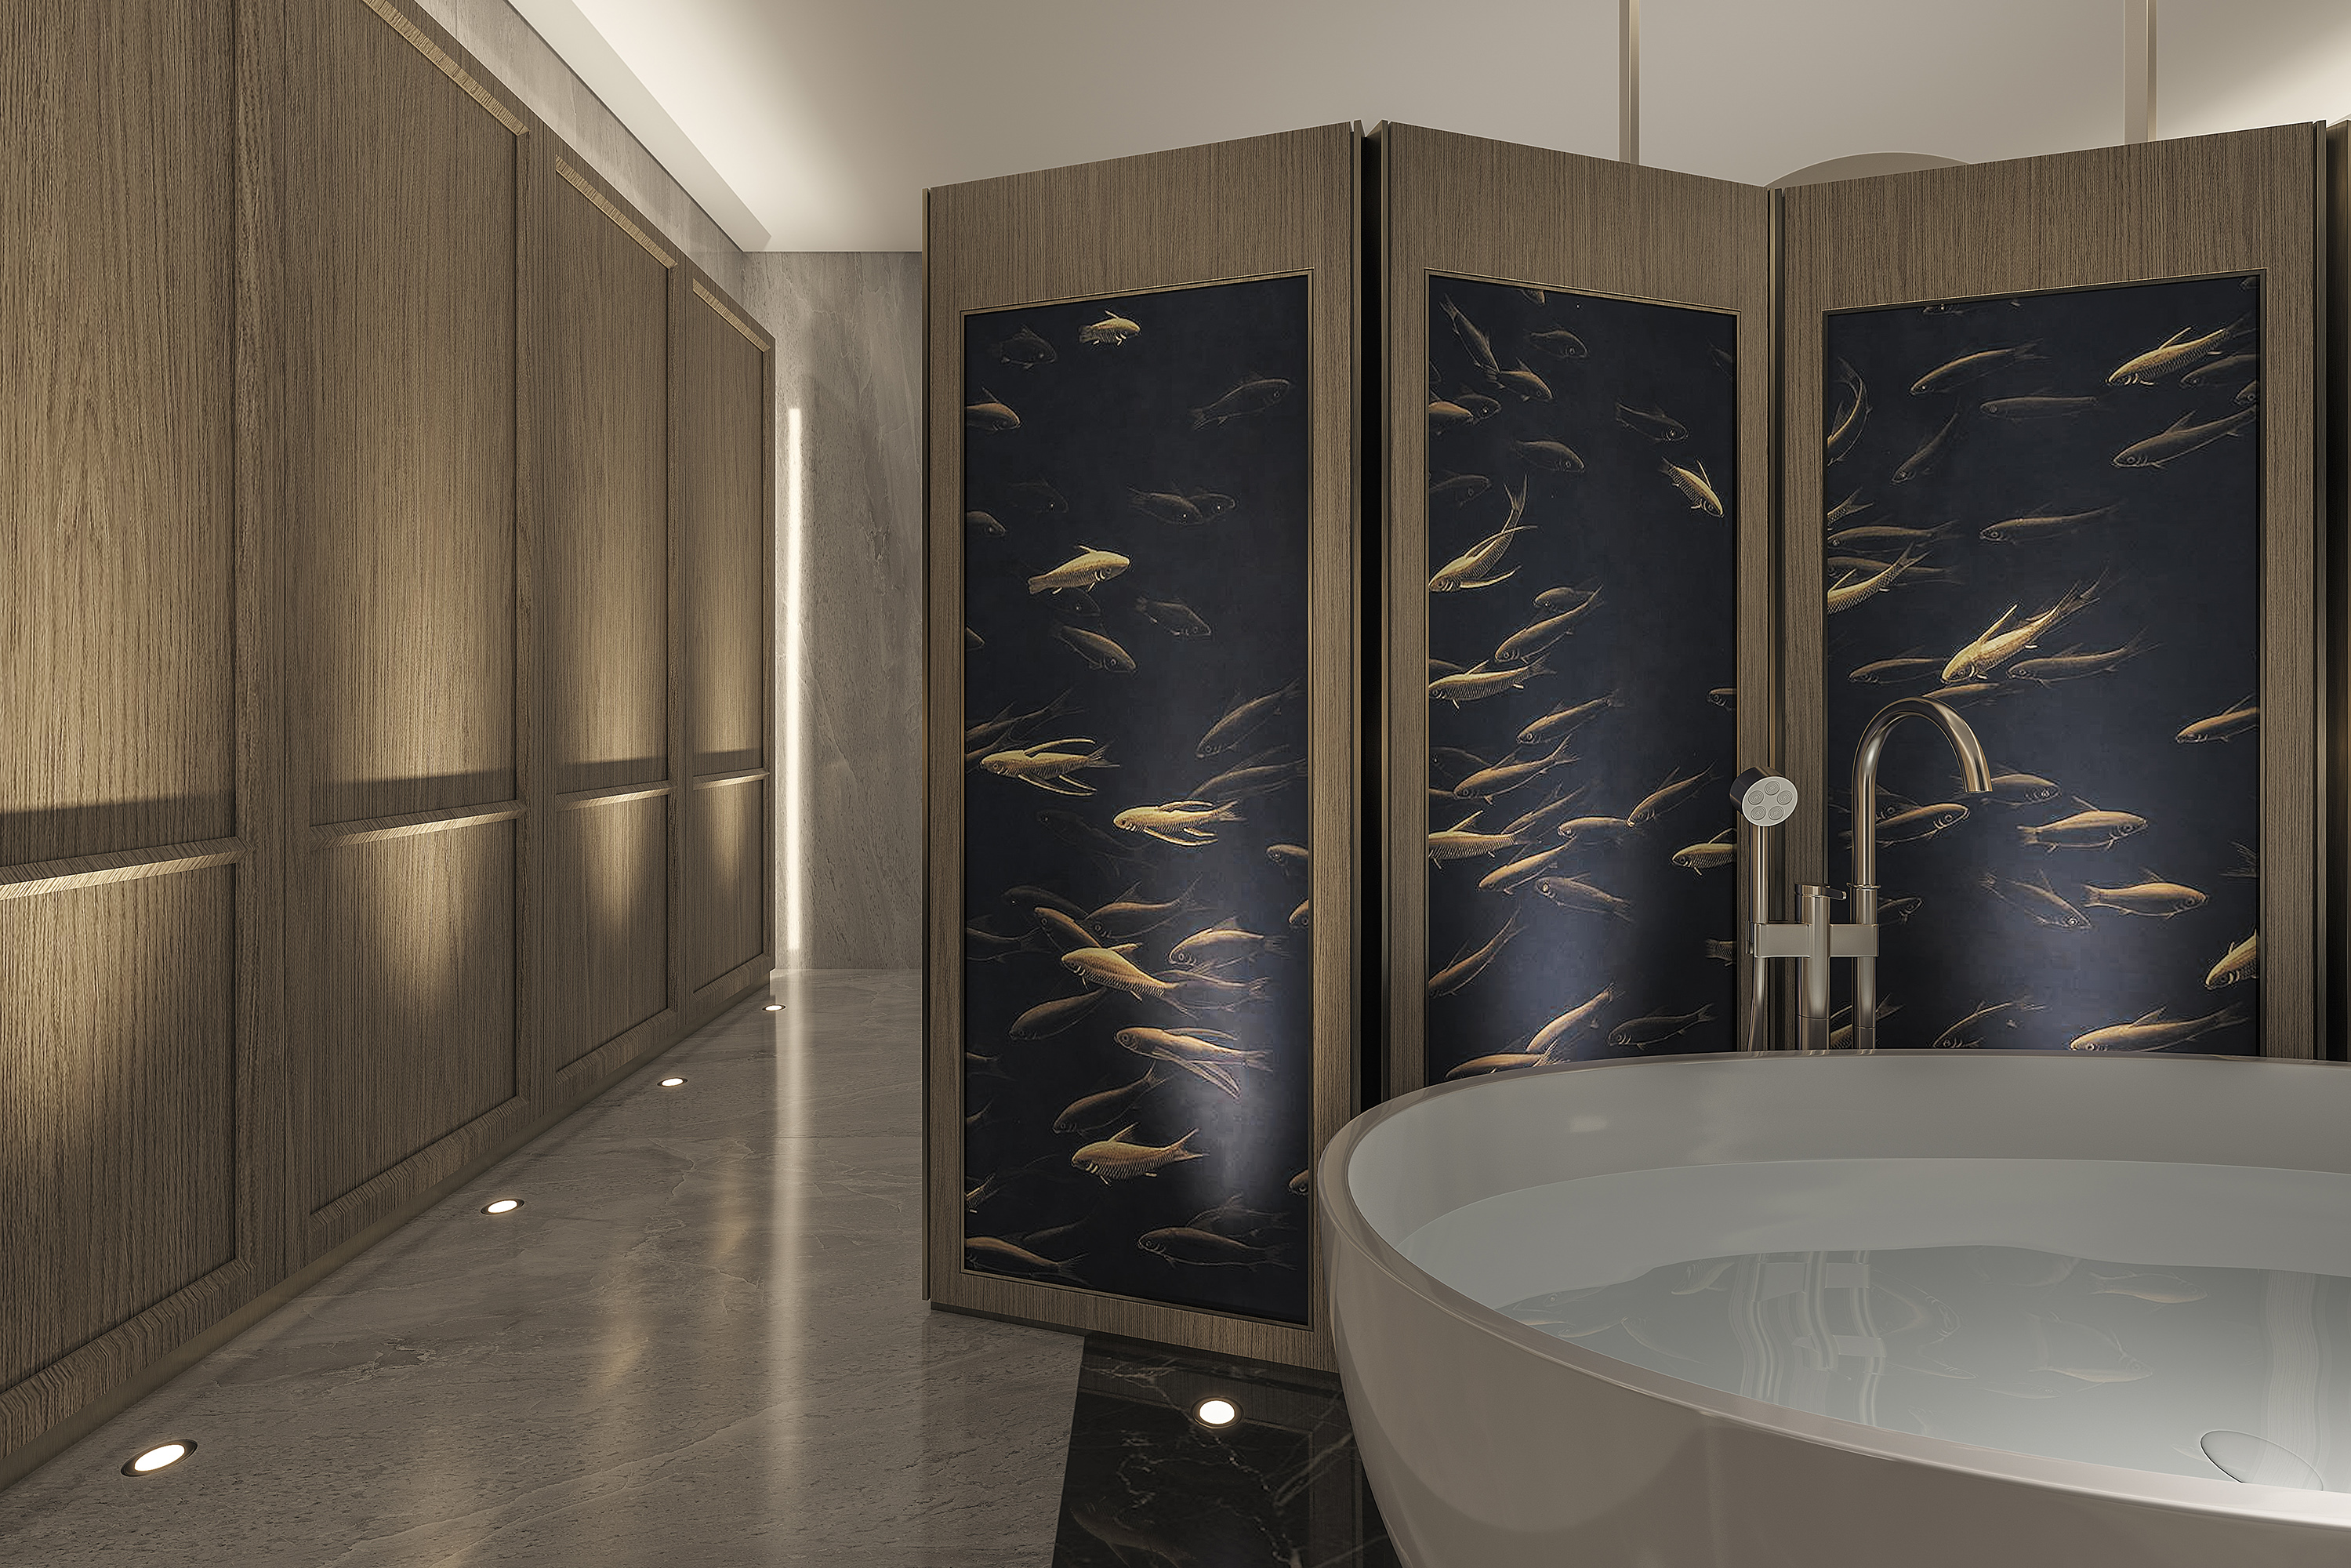 Gavin Leung - Bagua+Bhava - Private Bathroom Design